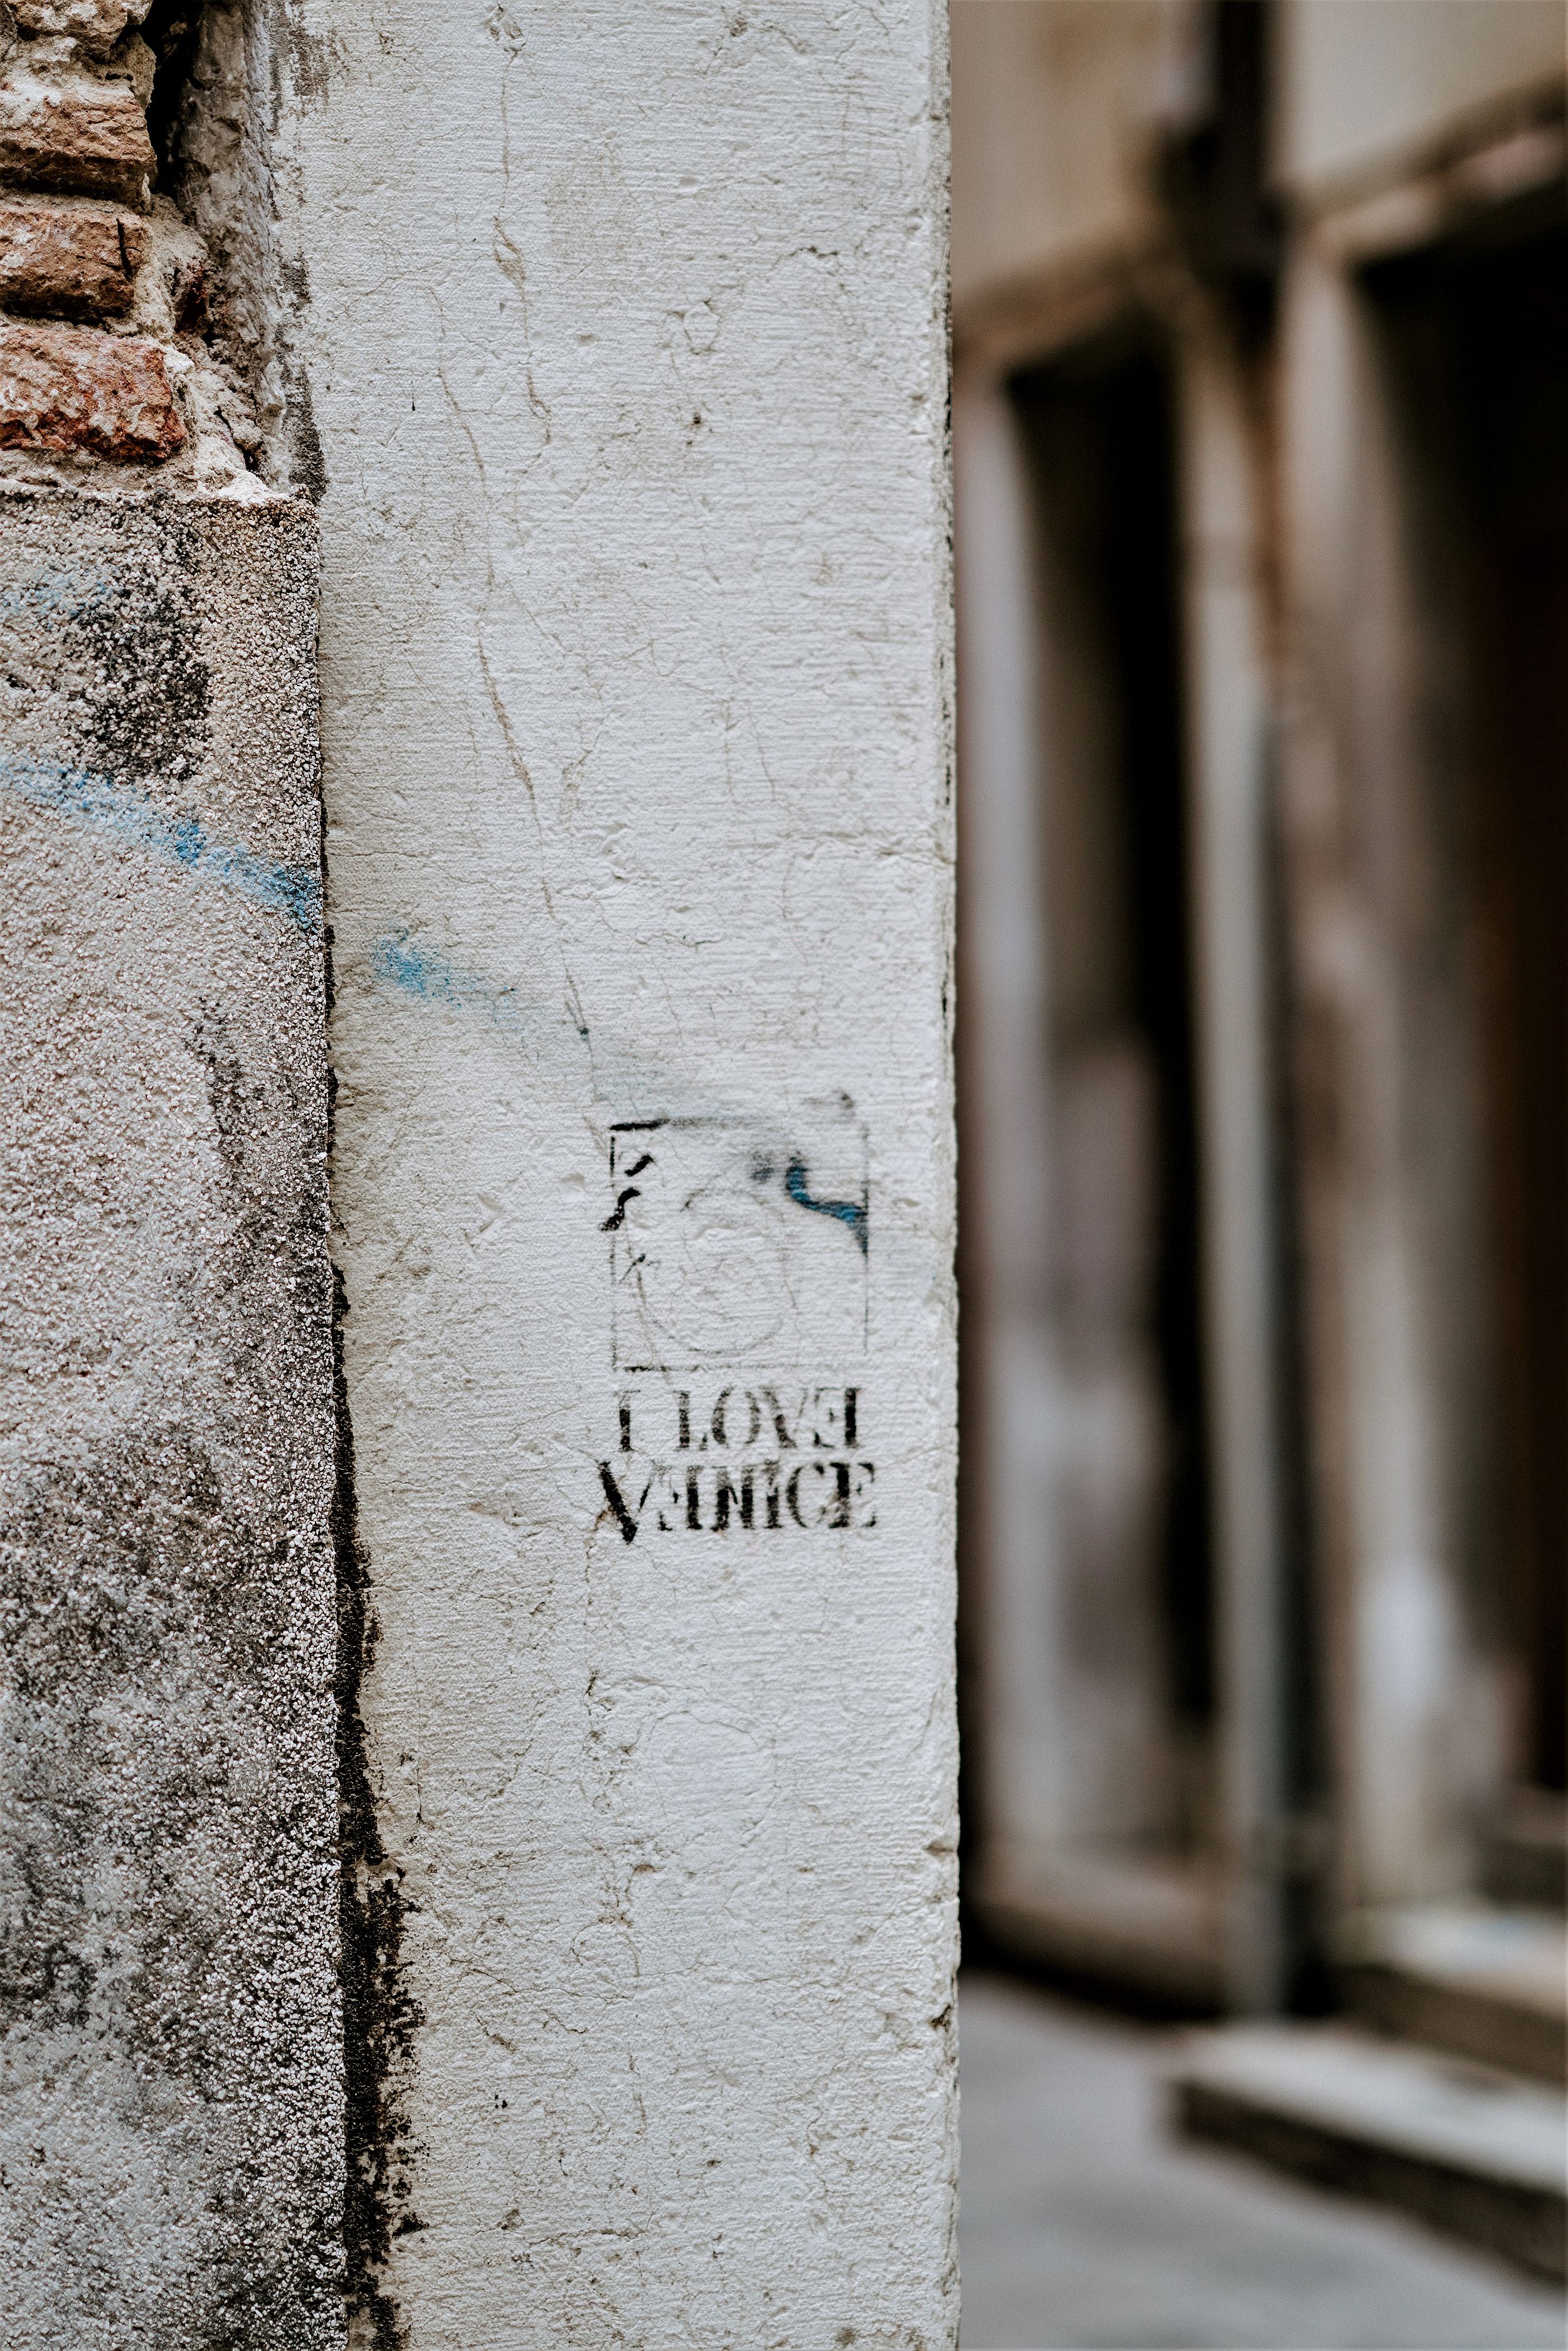 I love Venice written on wall